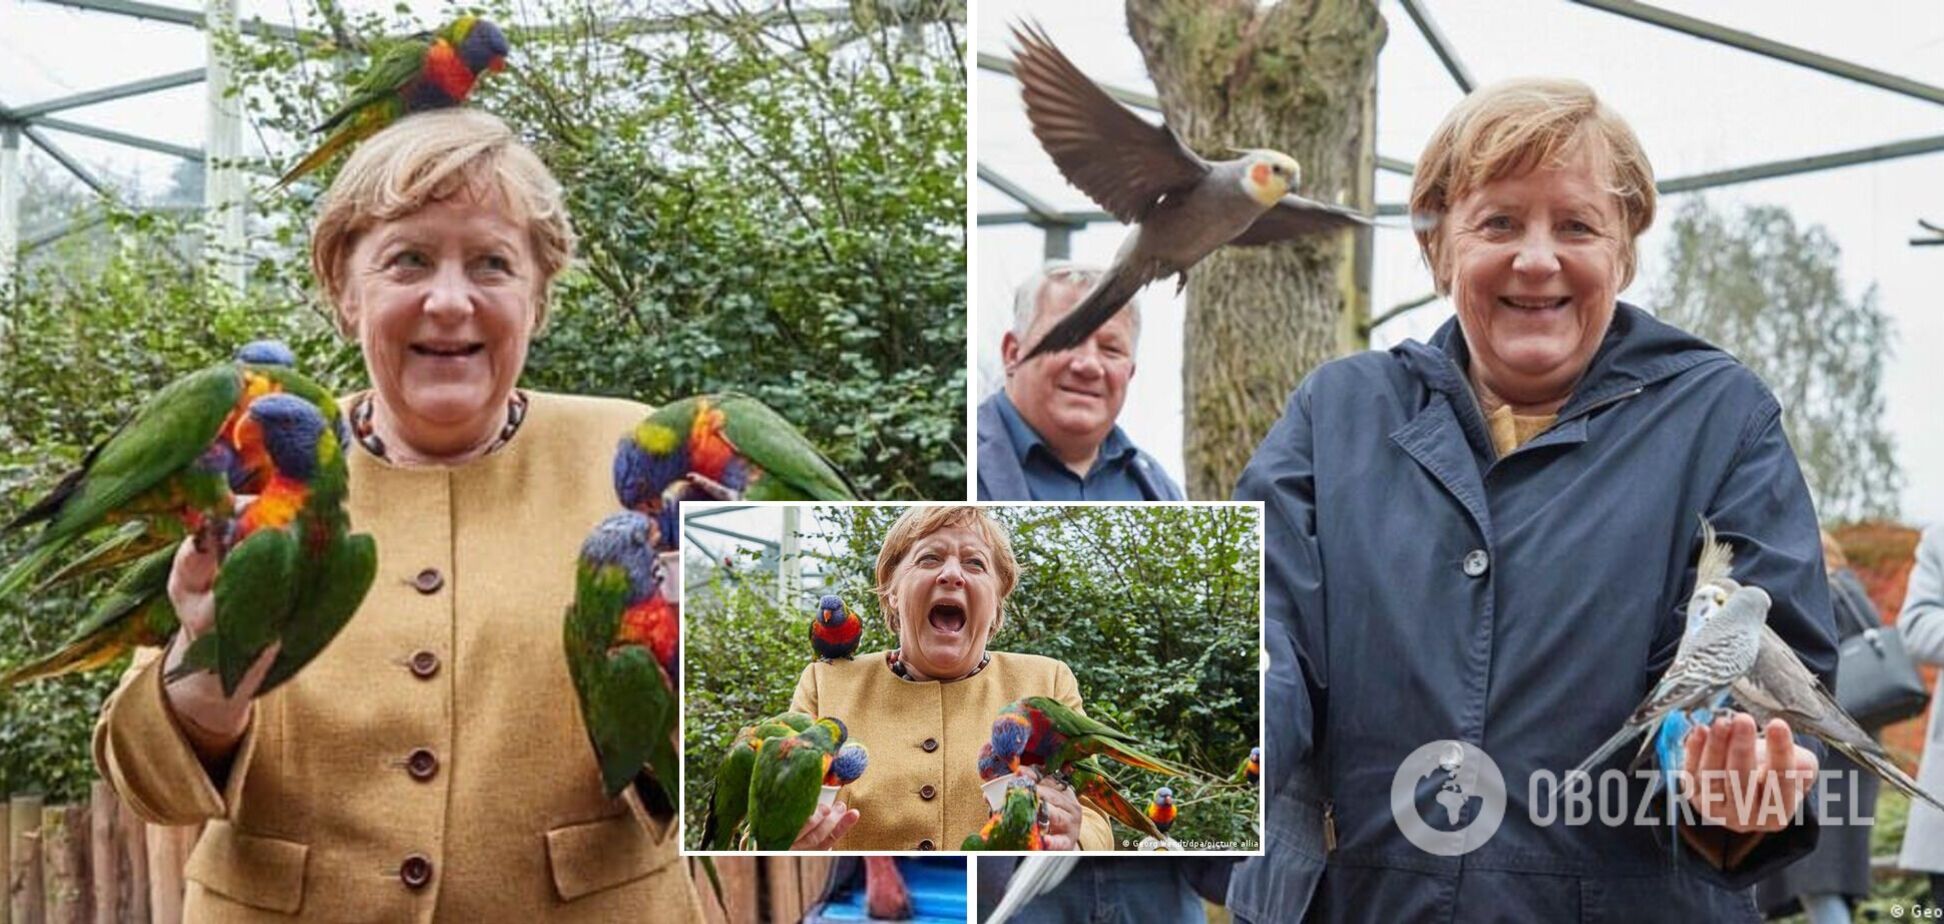 Angela Merkel Birds